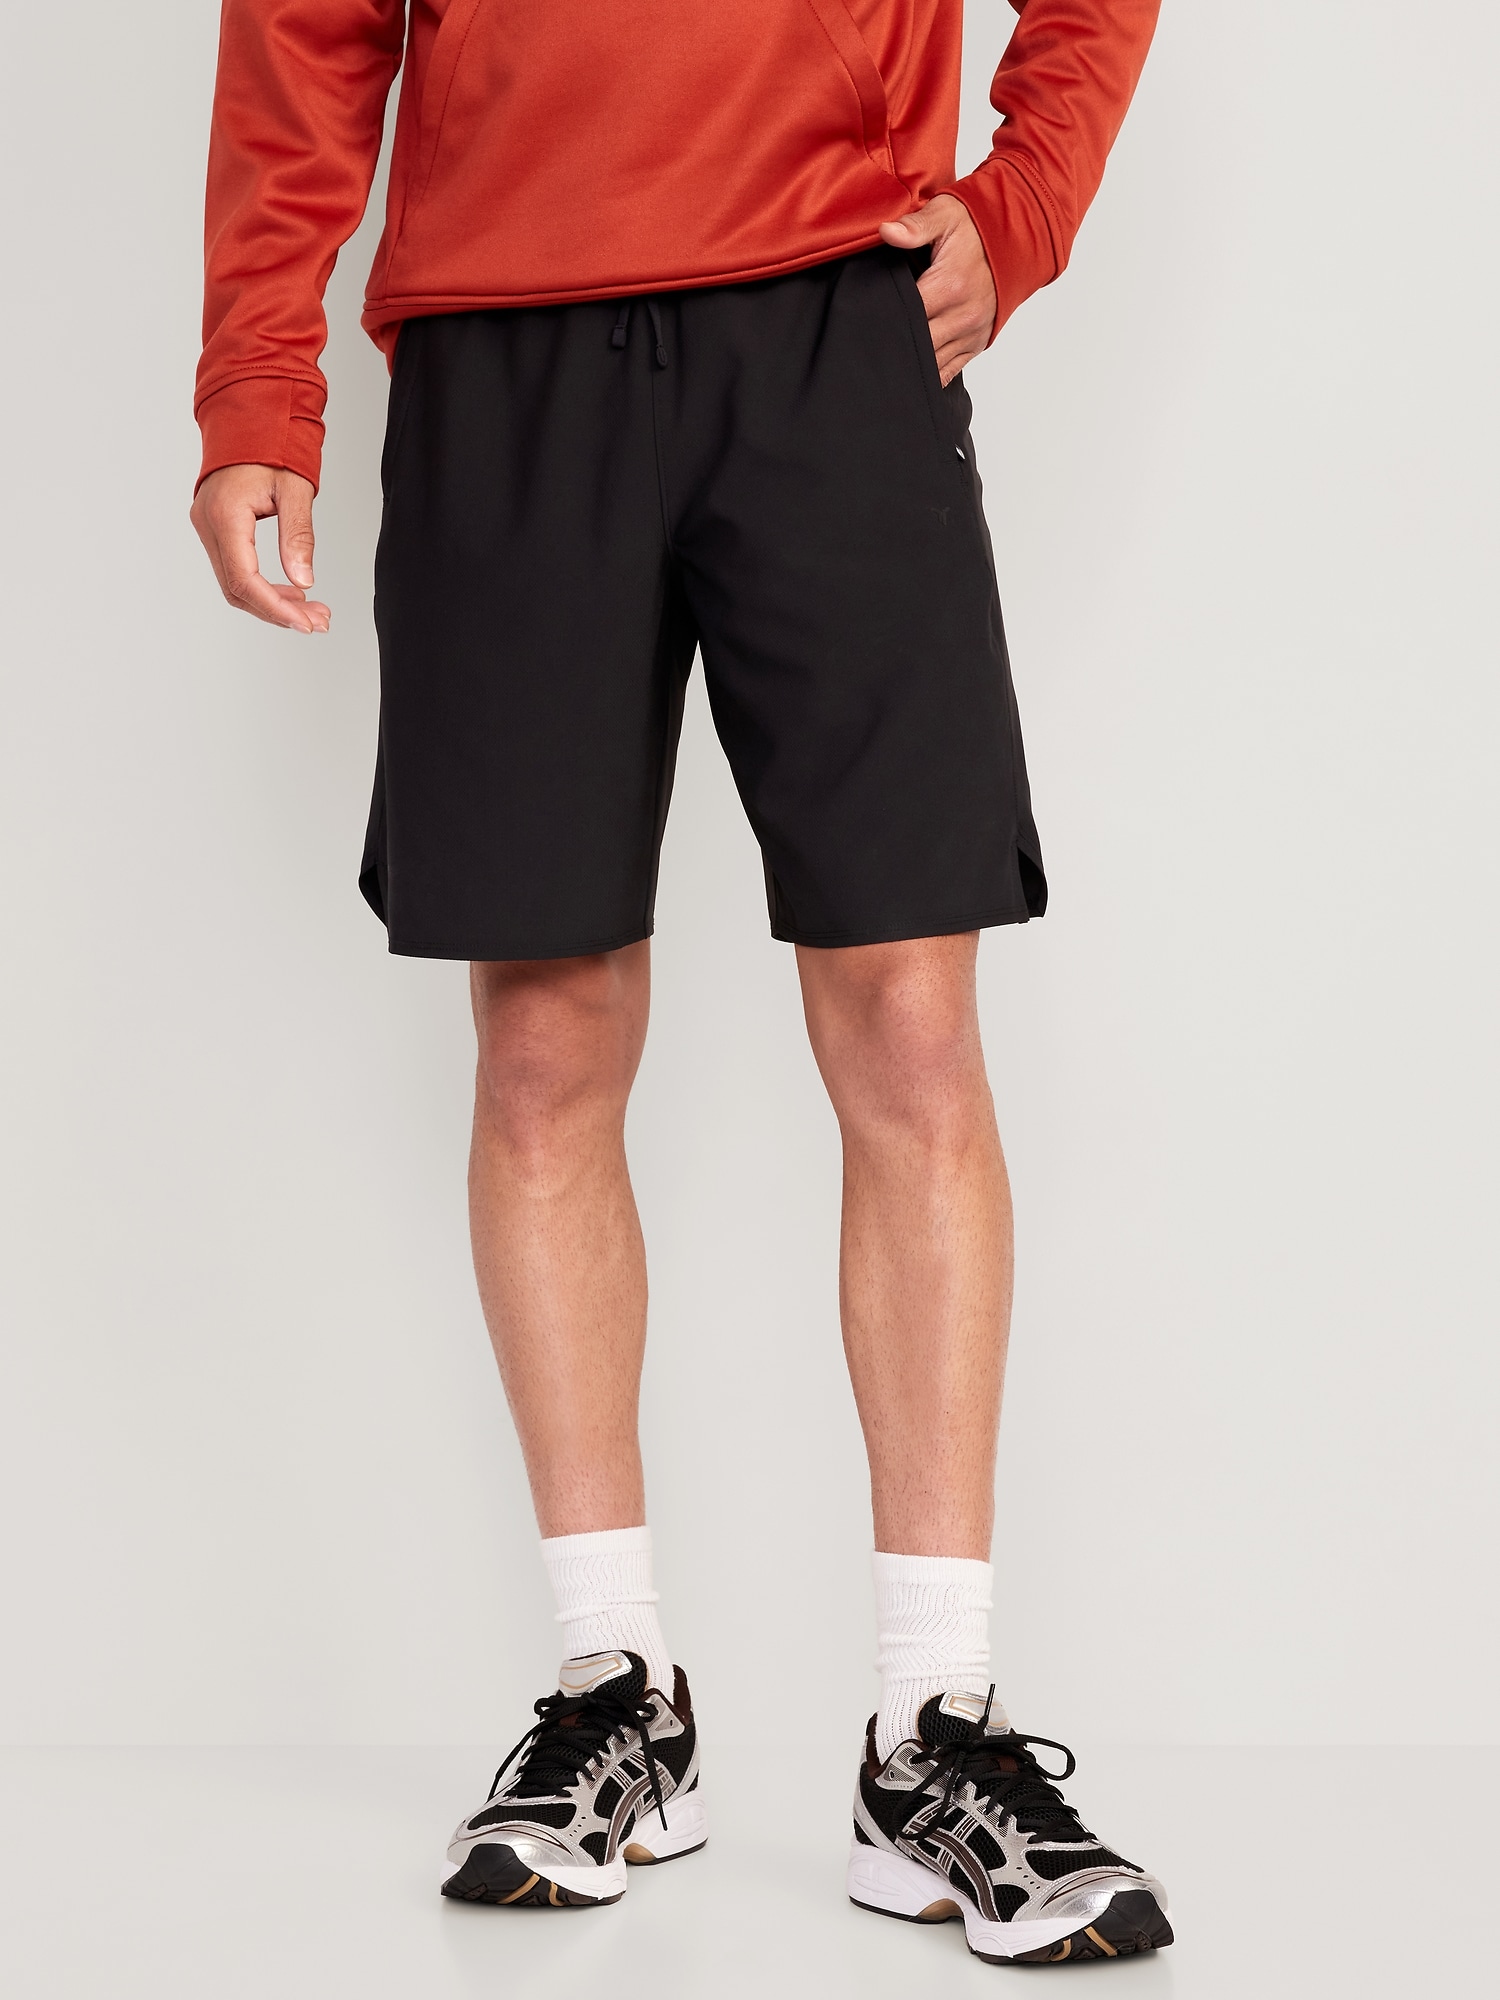 Go Workout Shorts -- 9-inch inseam